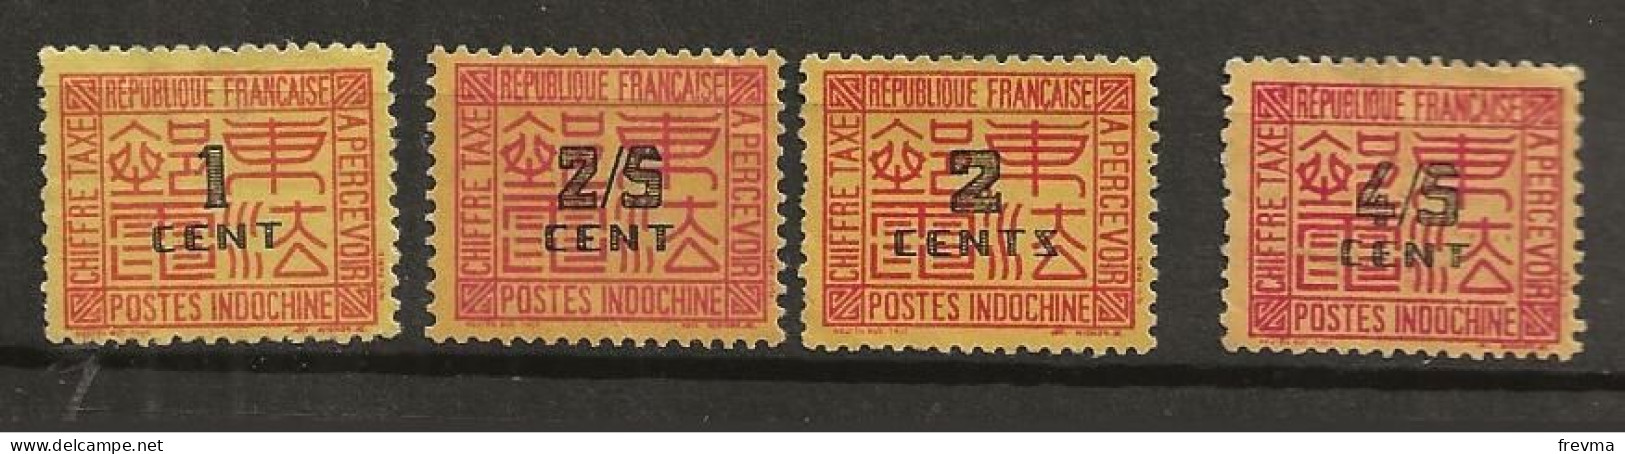 Timbre Poste Indochine Taxe Republique Francaise 1931-1941 - Postage Due